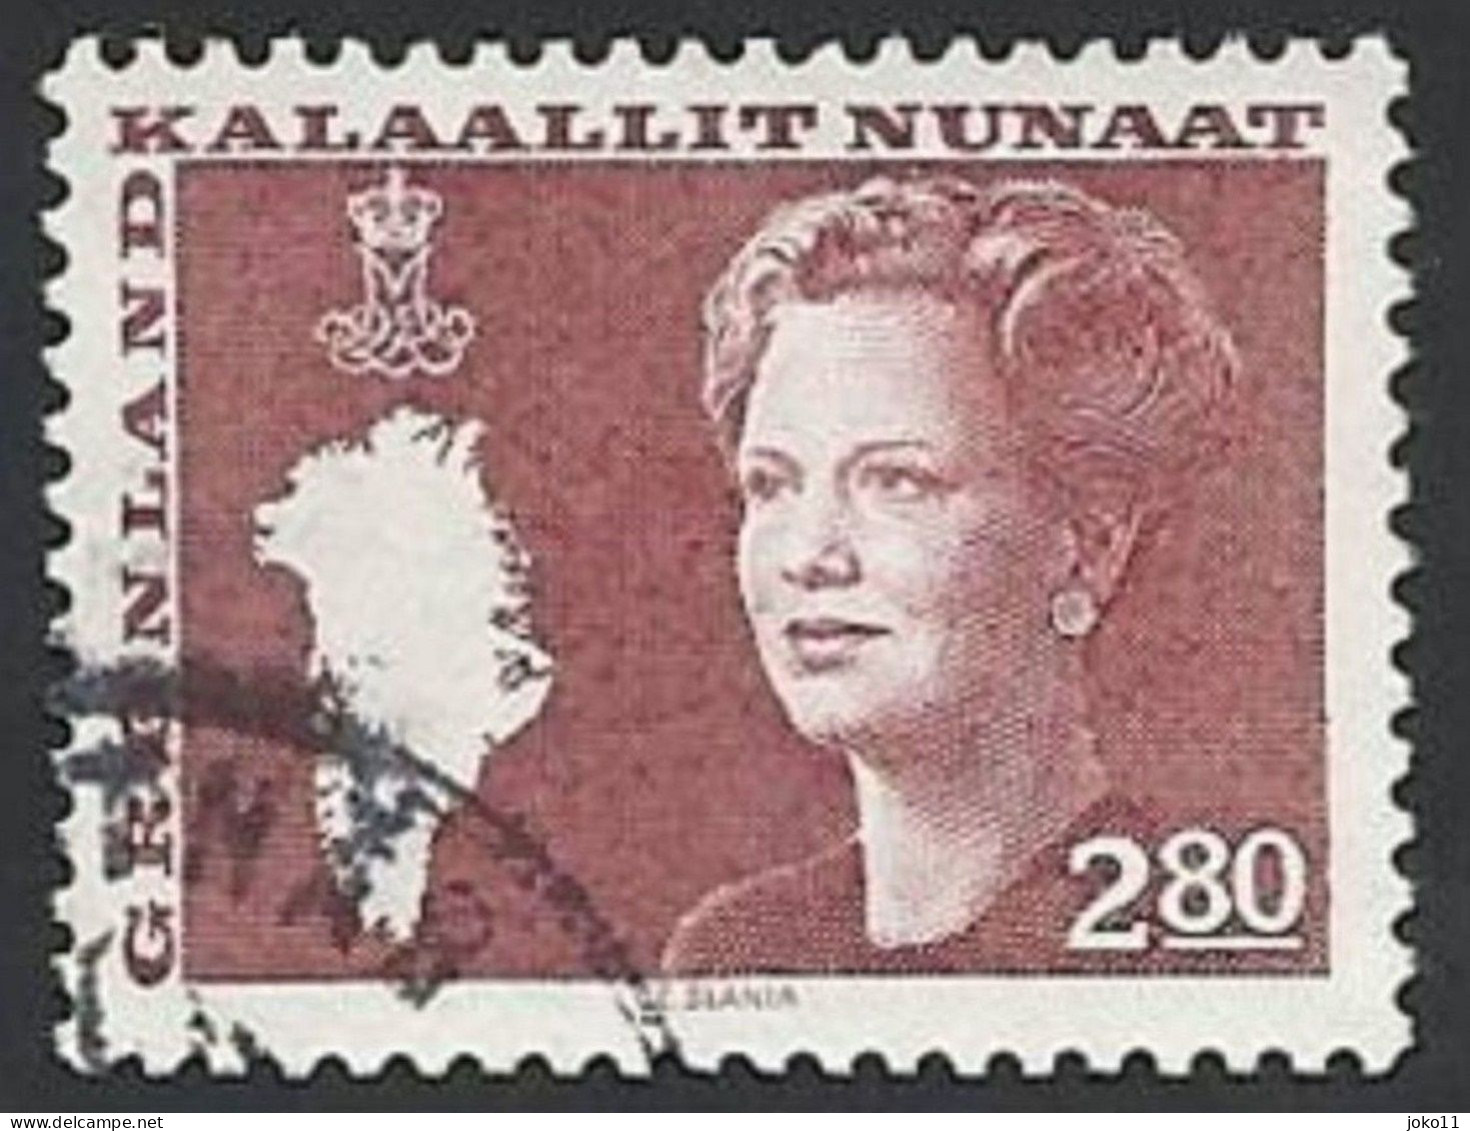 Grönland, 1985, Mi.-Nr. 155, Gestempelt - Used Stamps